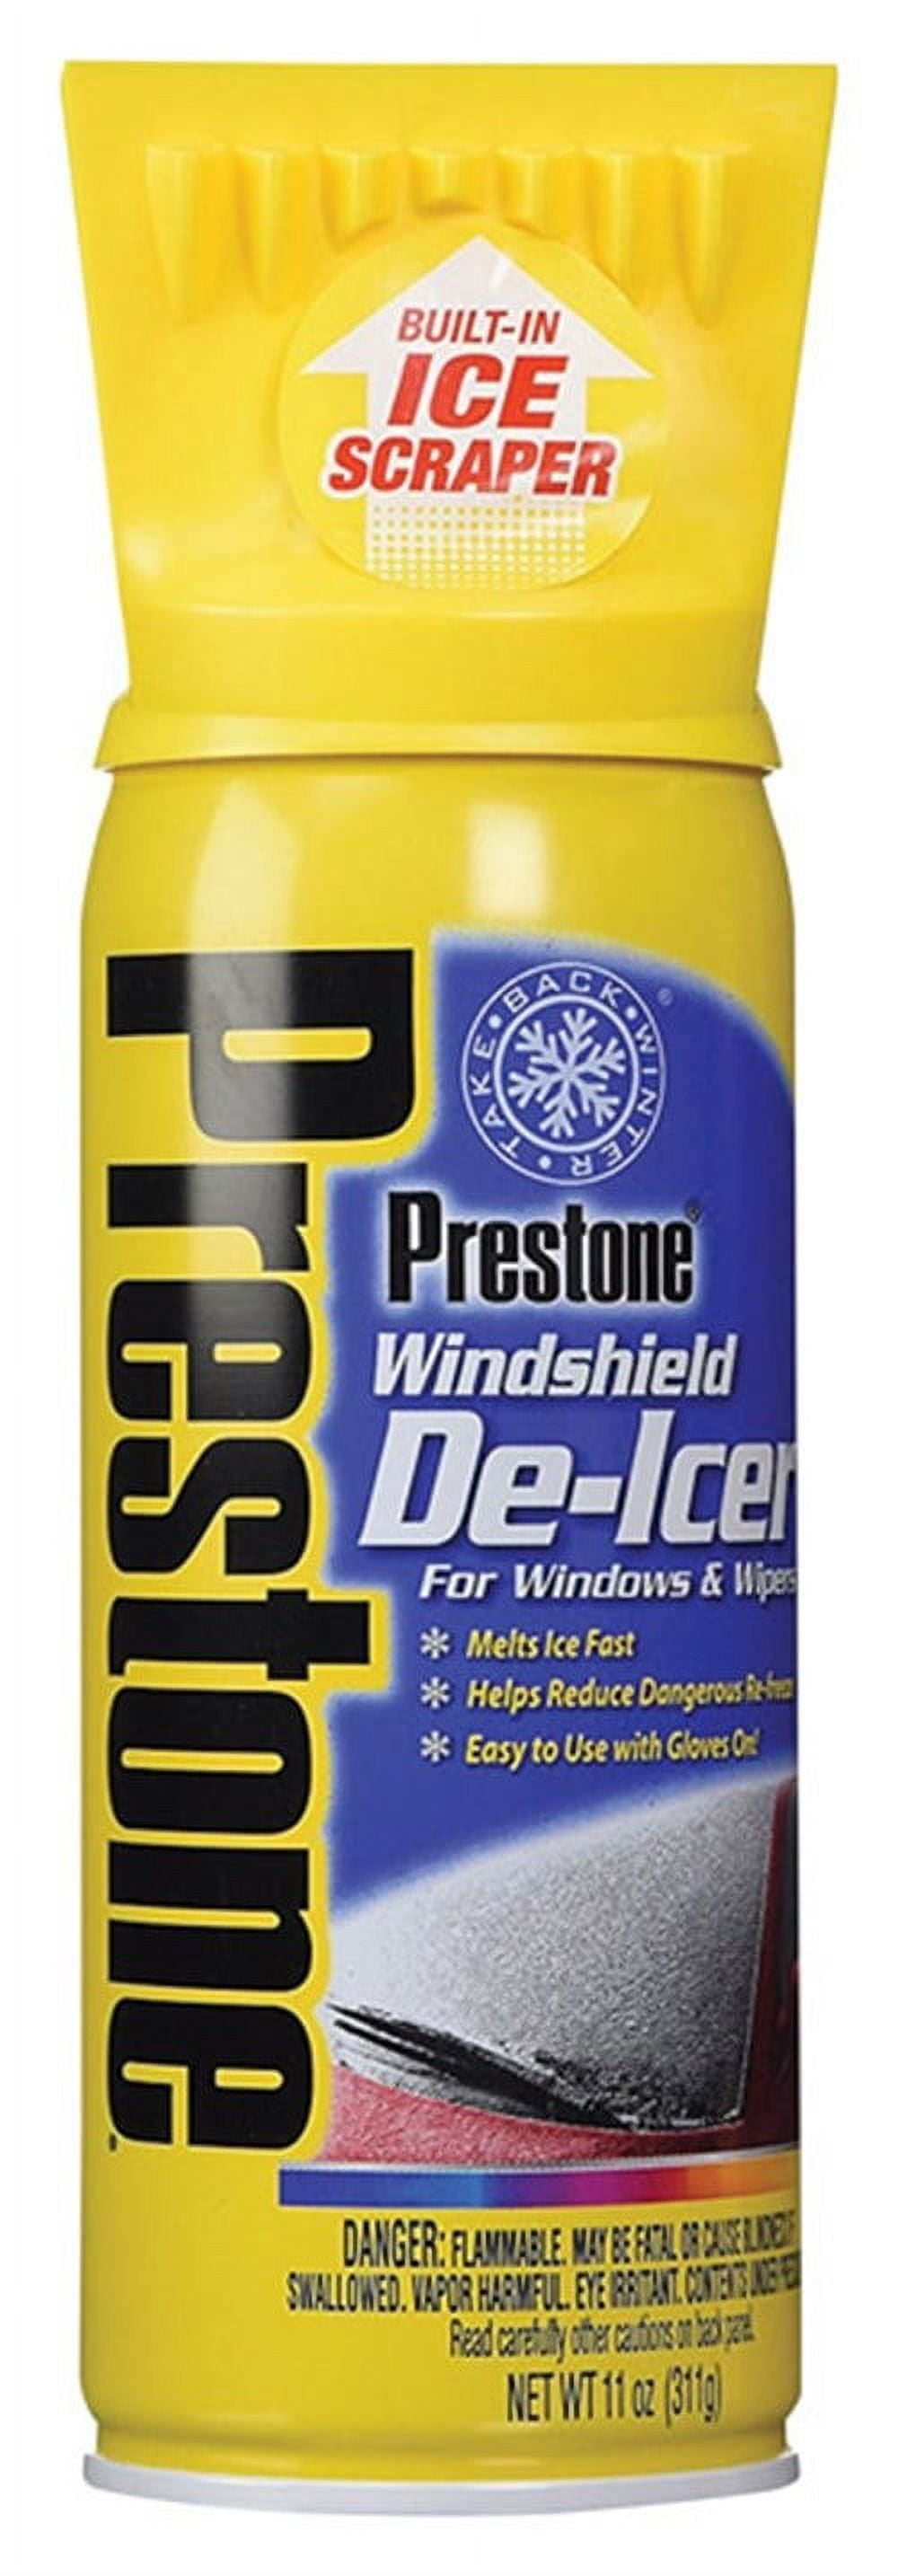 New!! Prestone Windshield De-icer 17 oz Spray Can w/Built in ice